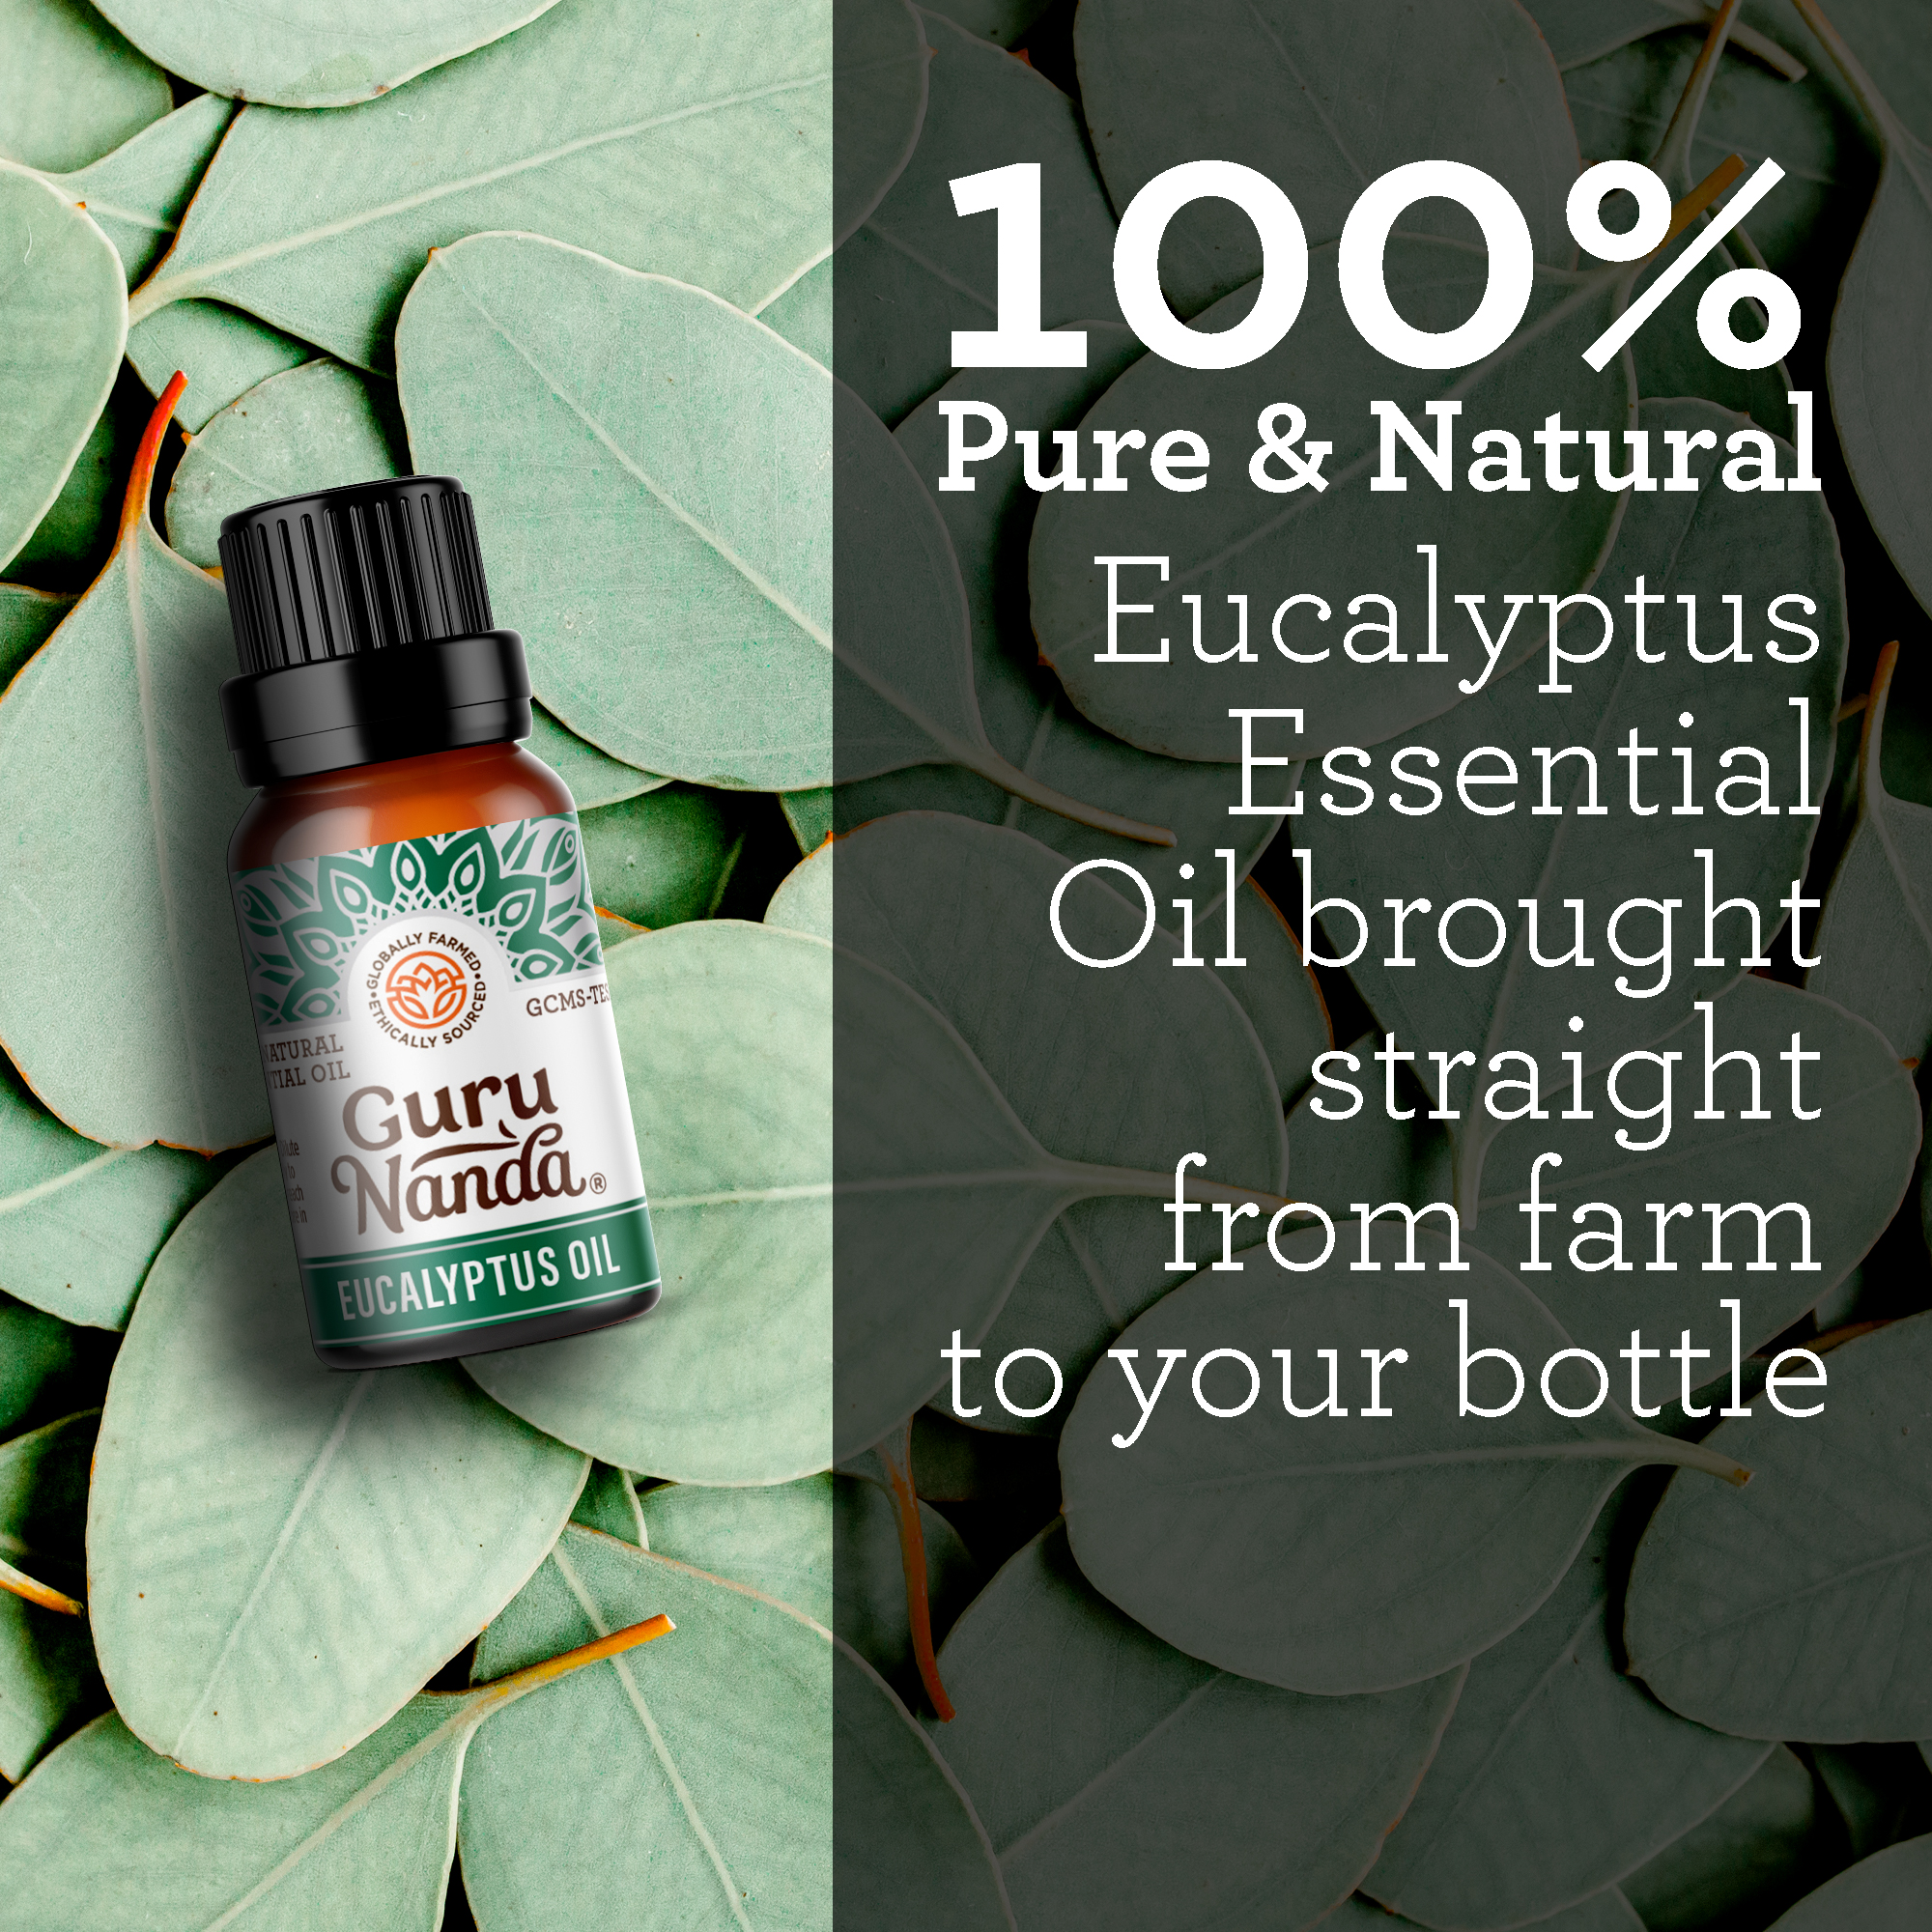 GuruNanda 100% Pure & Natural Eucalyptus Essential Oil for Aromatherapy & Diffuser - 15ml - image 4 of 8